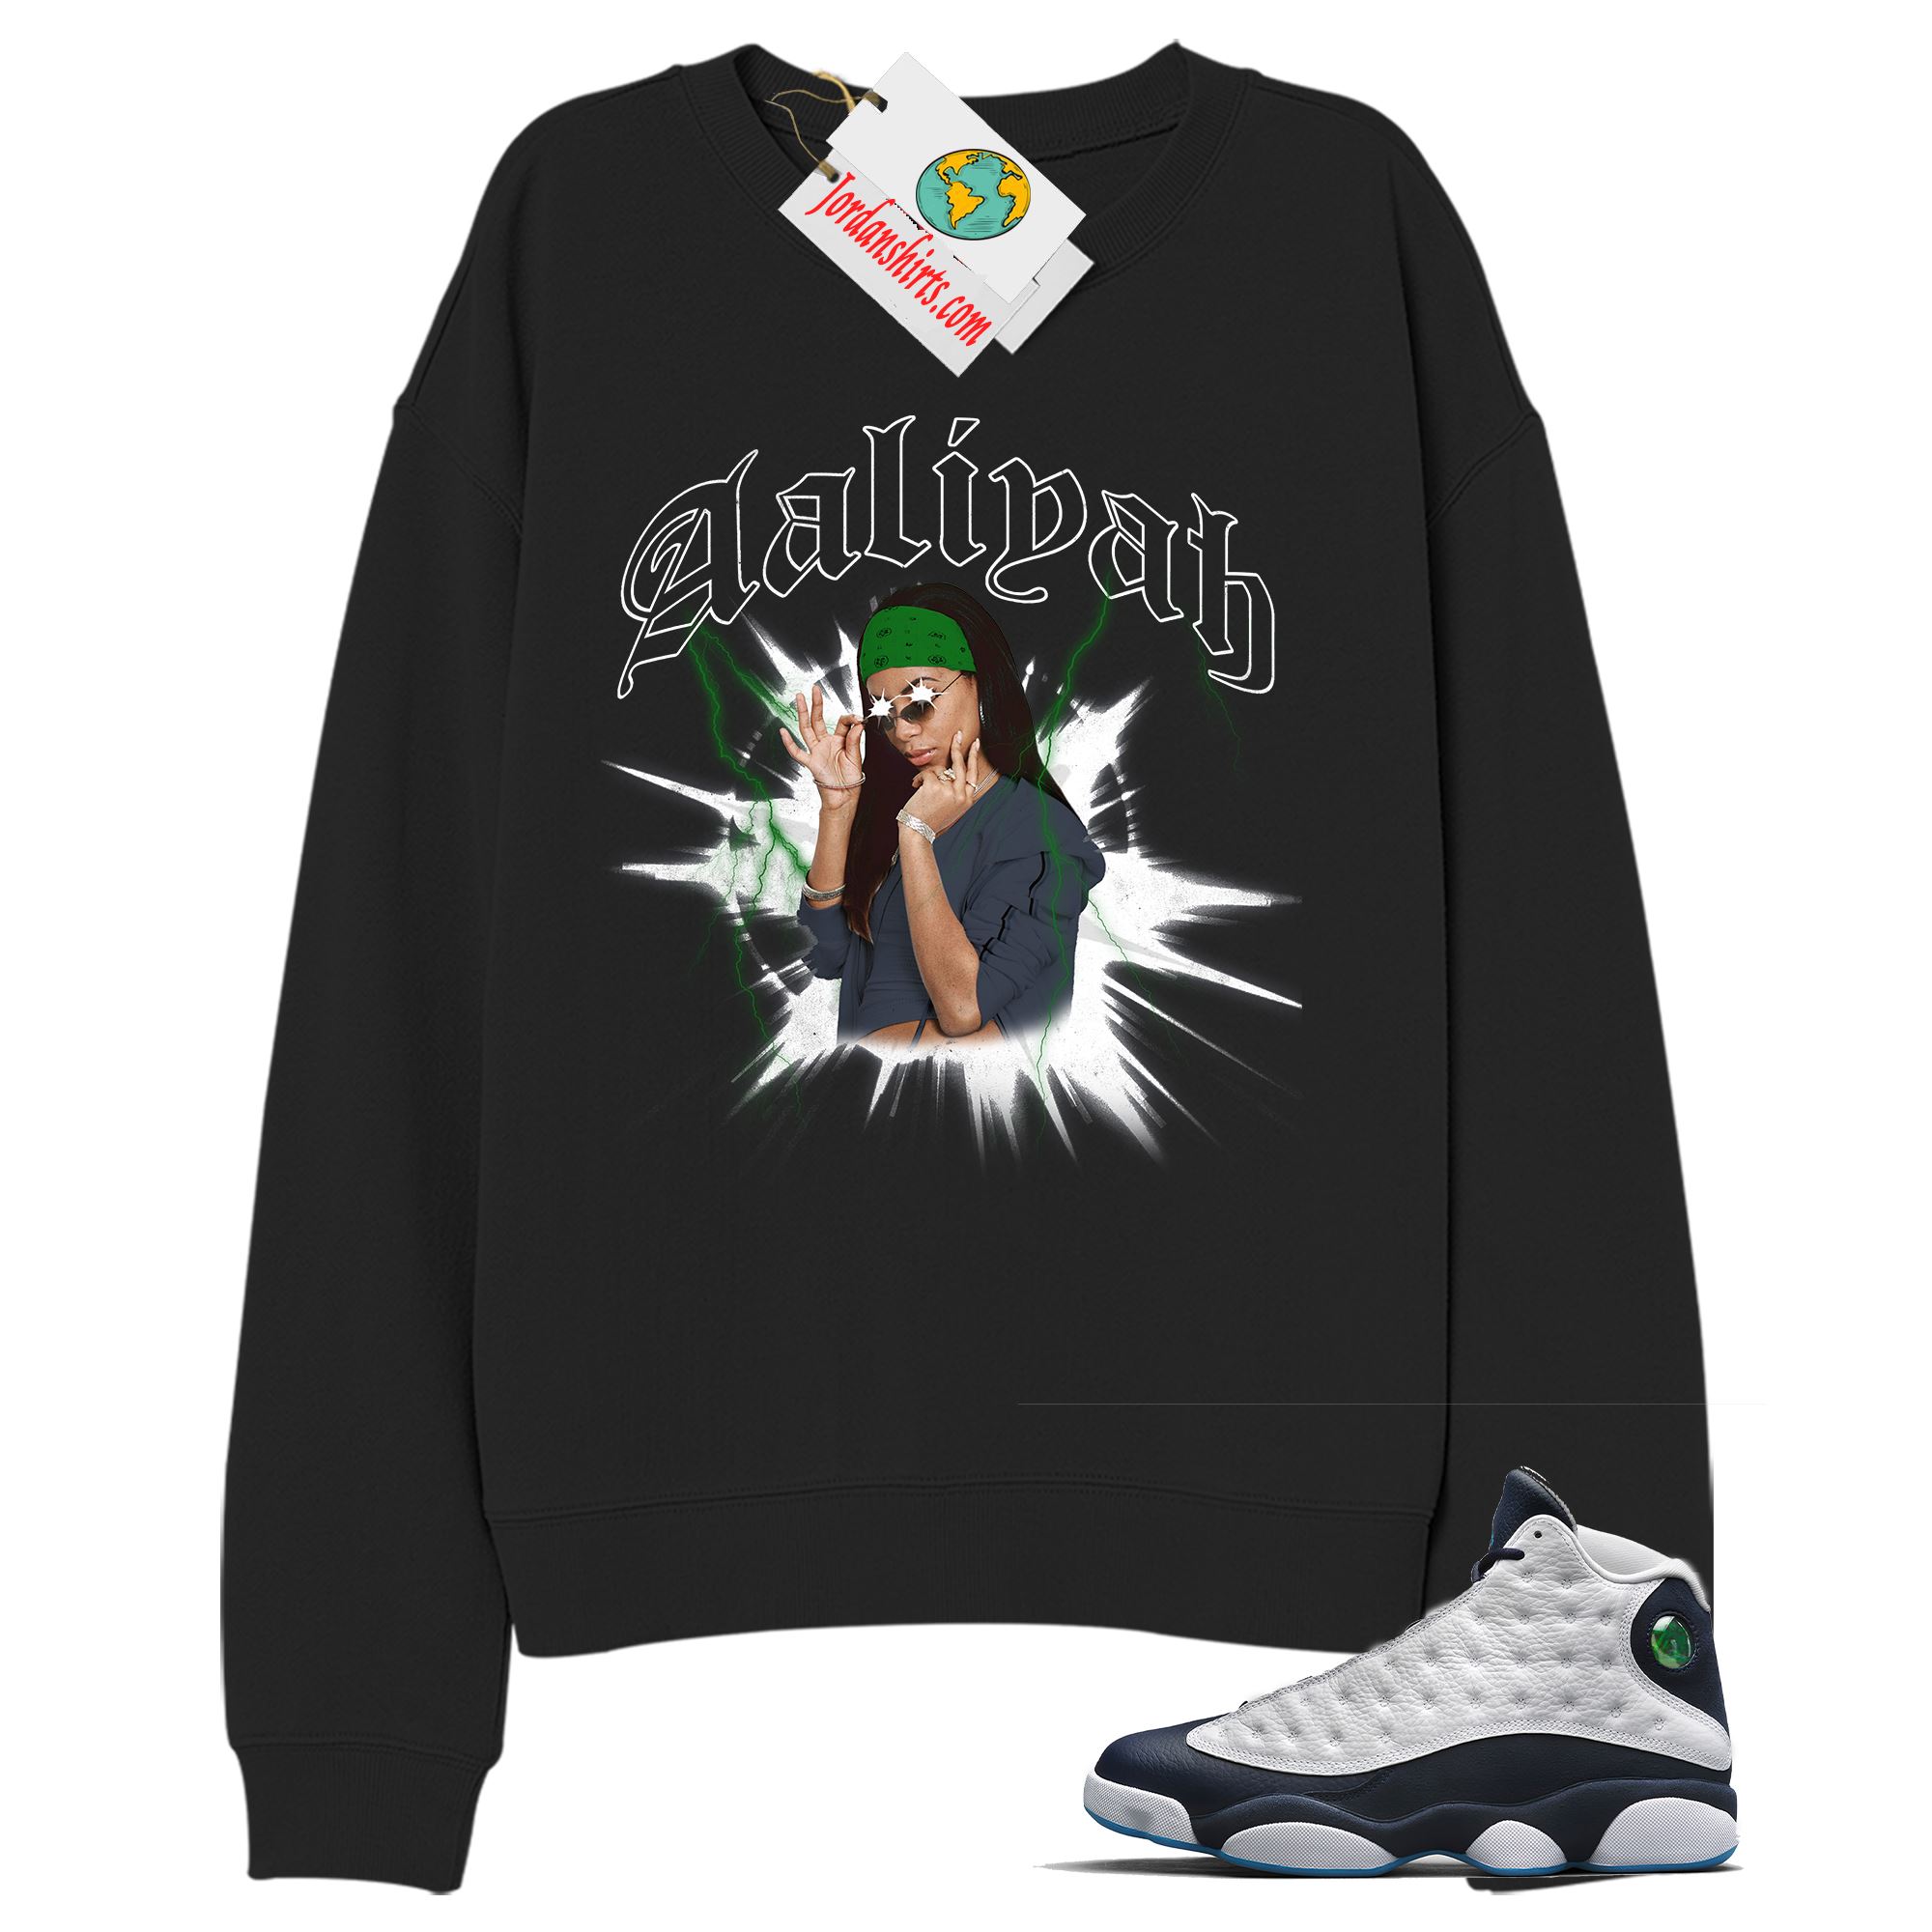 Jordan 13 Sweatshirt, Legend Aaliyah Black Sweatshirt Air Jordan 13 Obsidian 13s Full Size Up To 5xl